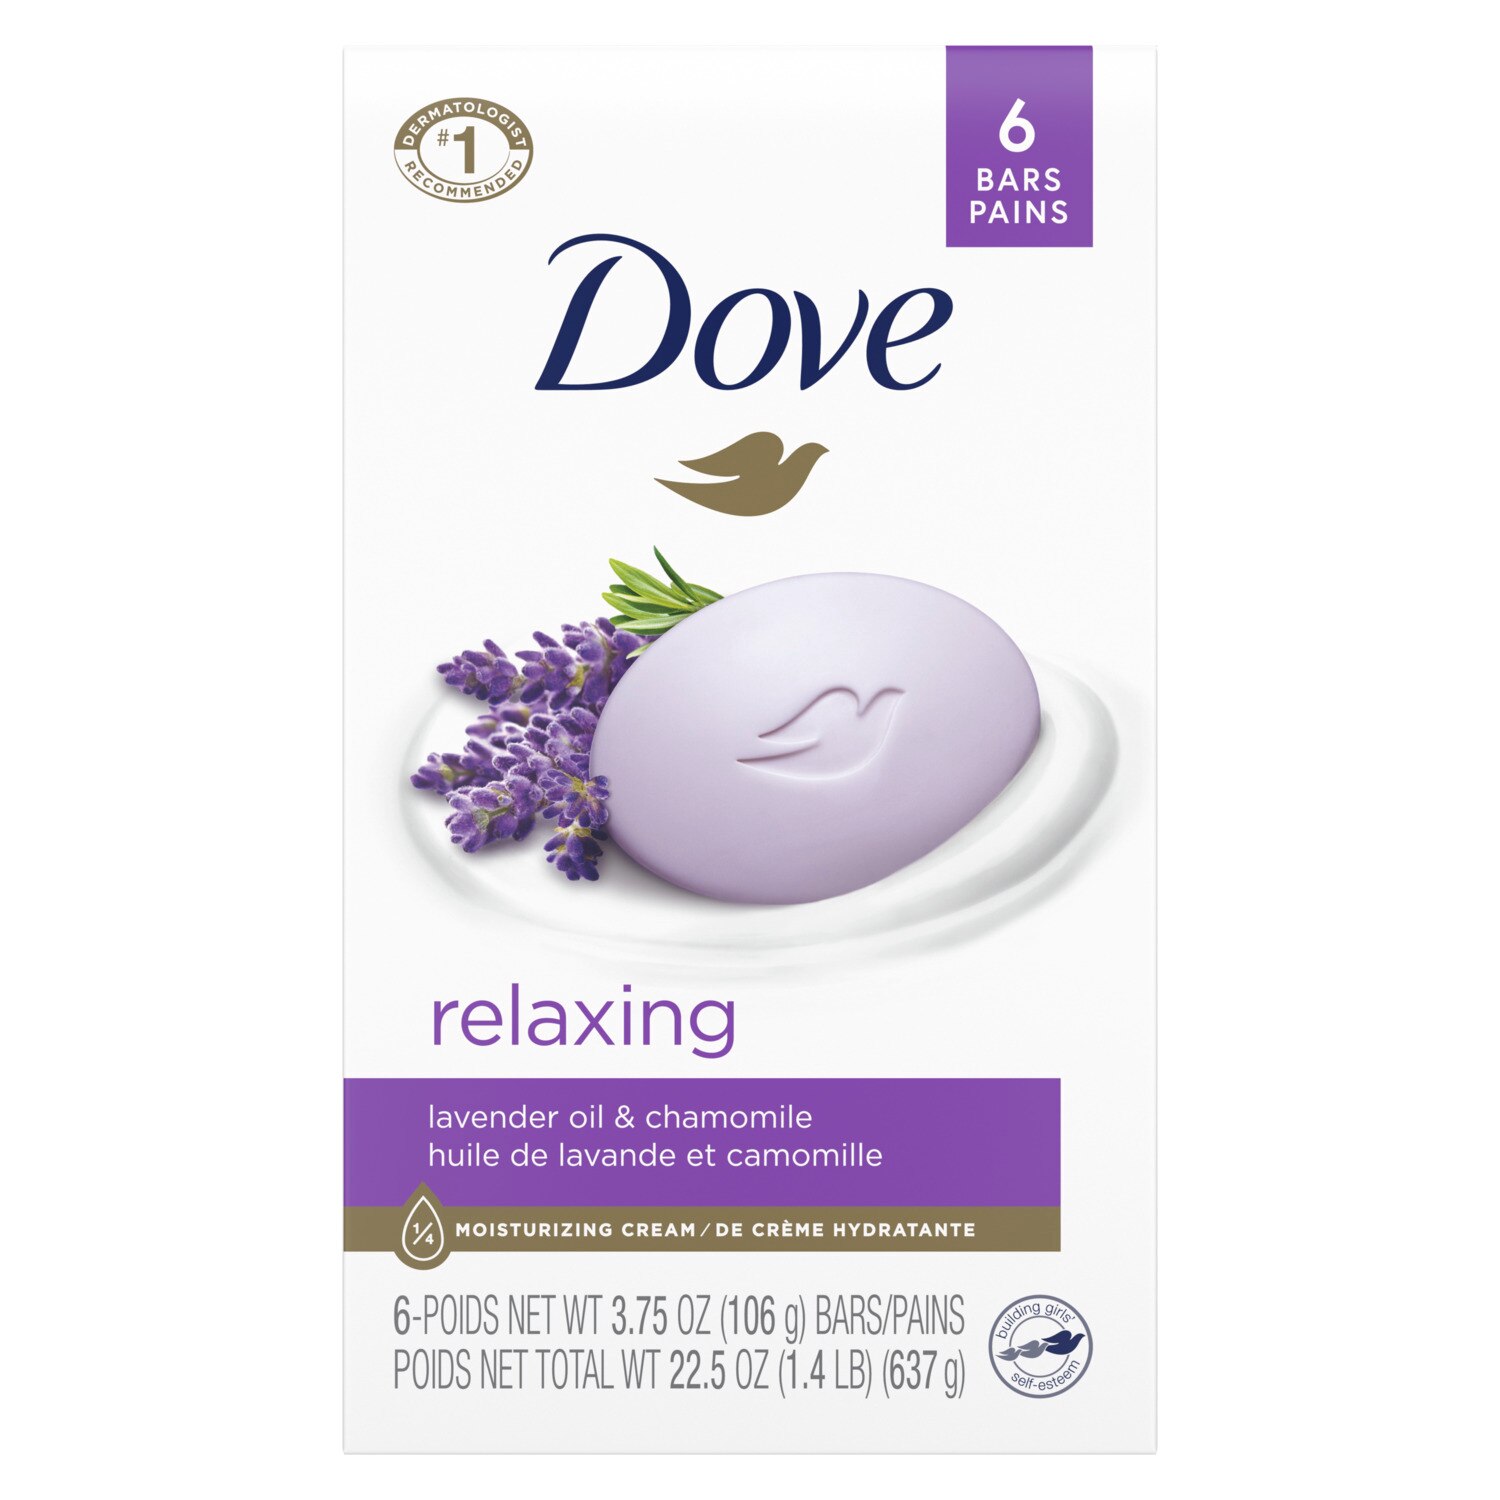 Dove More Moisturizing Than Bar Soap Relaxing Lavender Beauty Bar for Softer Skin, 3.75 OZ